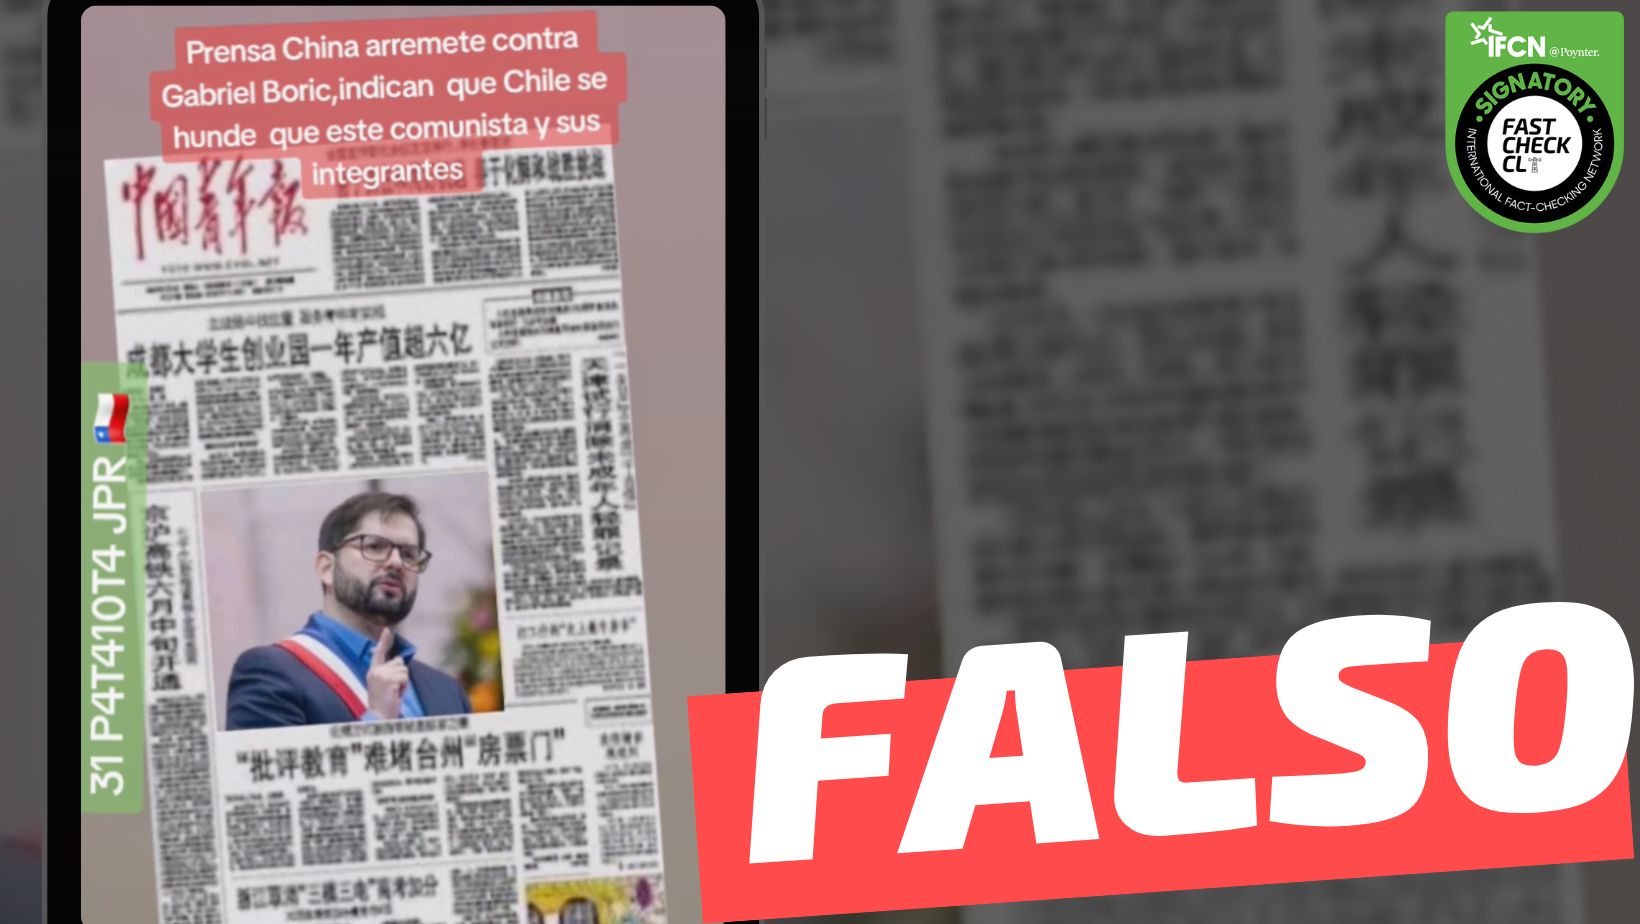 You are currently viewing (Imagen) “Prensa china arremete contra Gabriel Boric”: #Falso